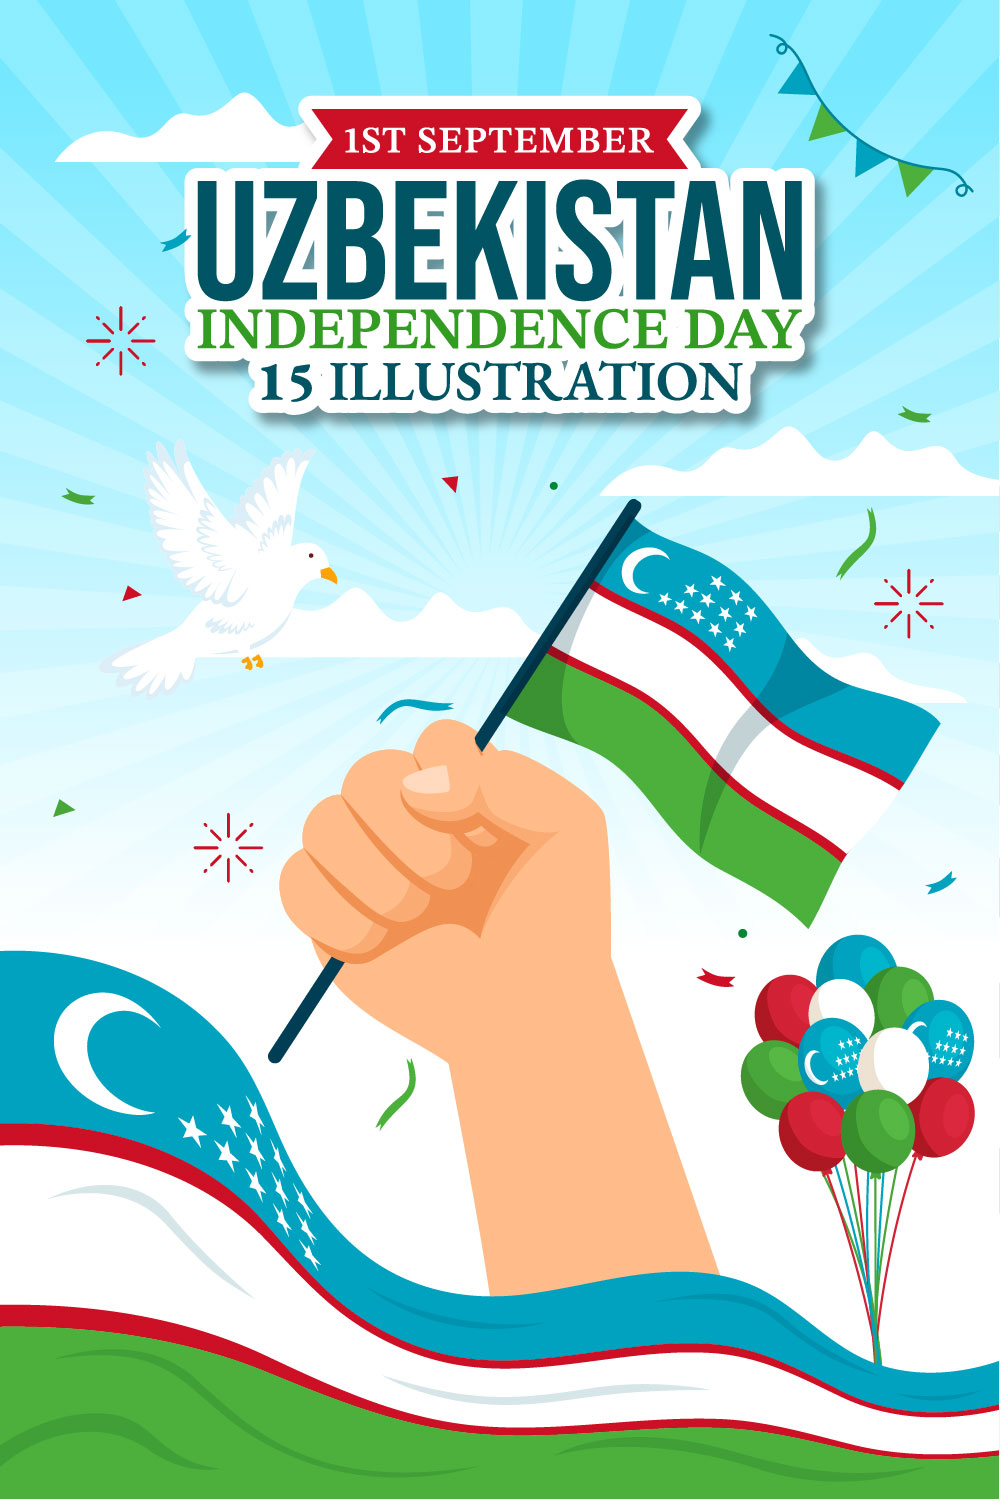 15 Uzbekistan Independence Day Illustration pinterest preview image.